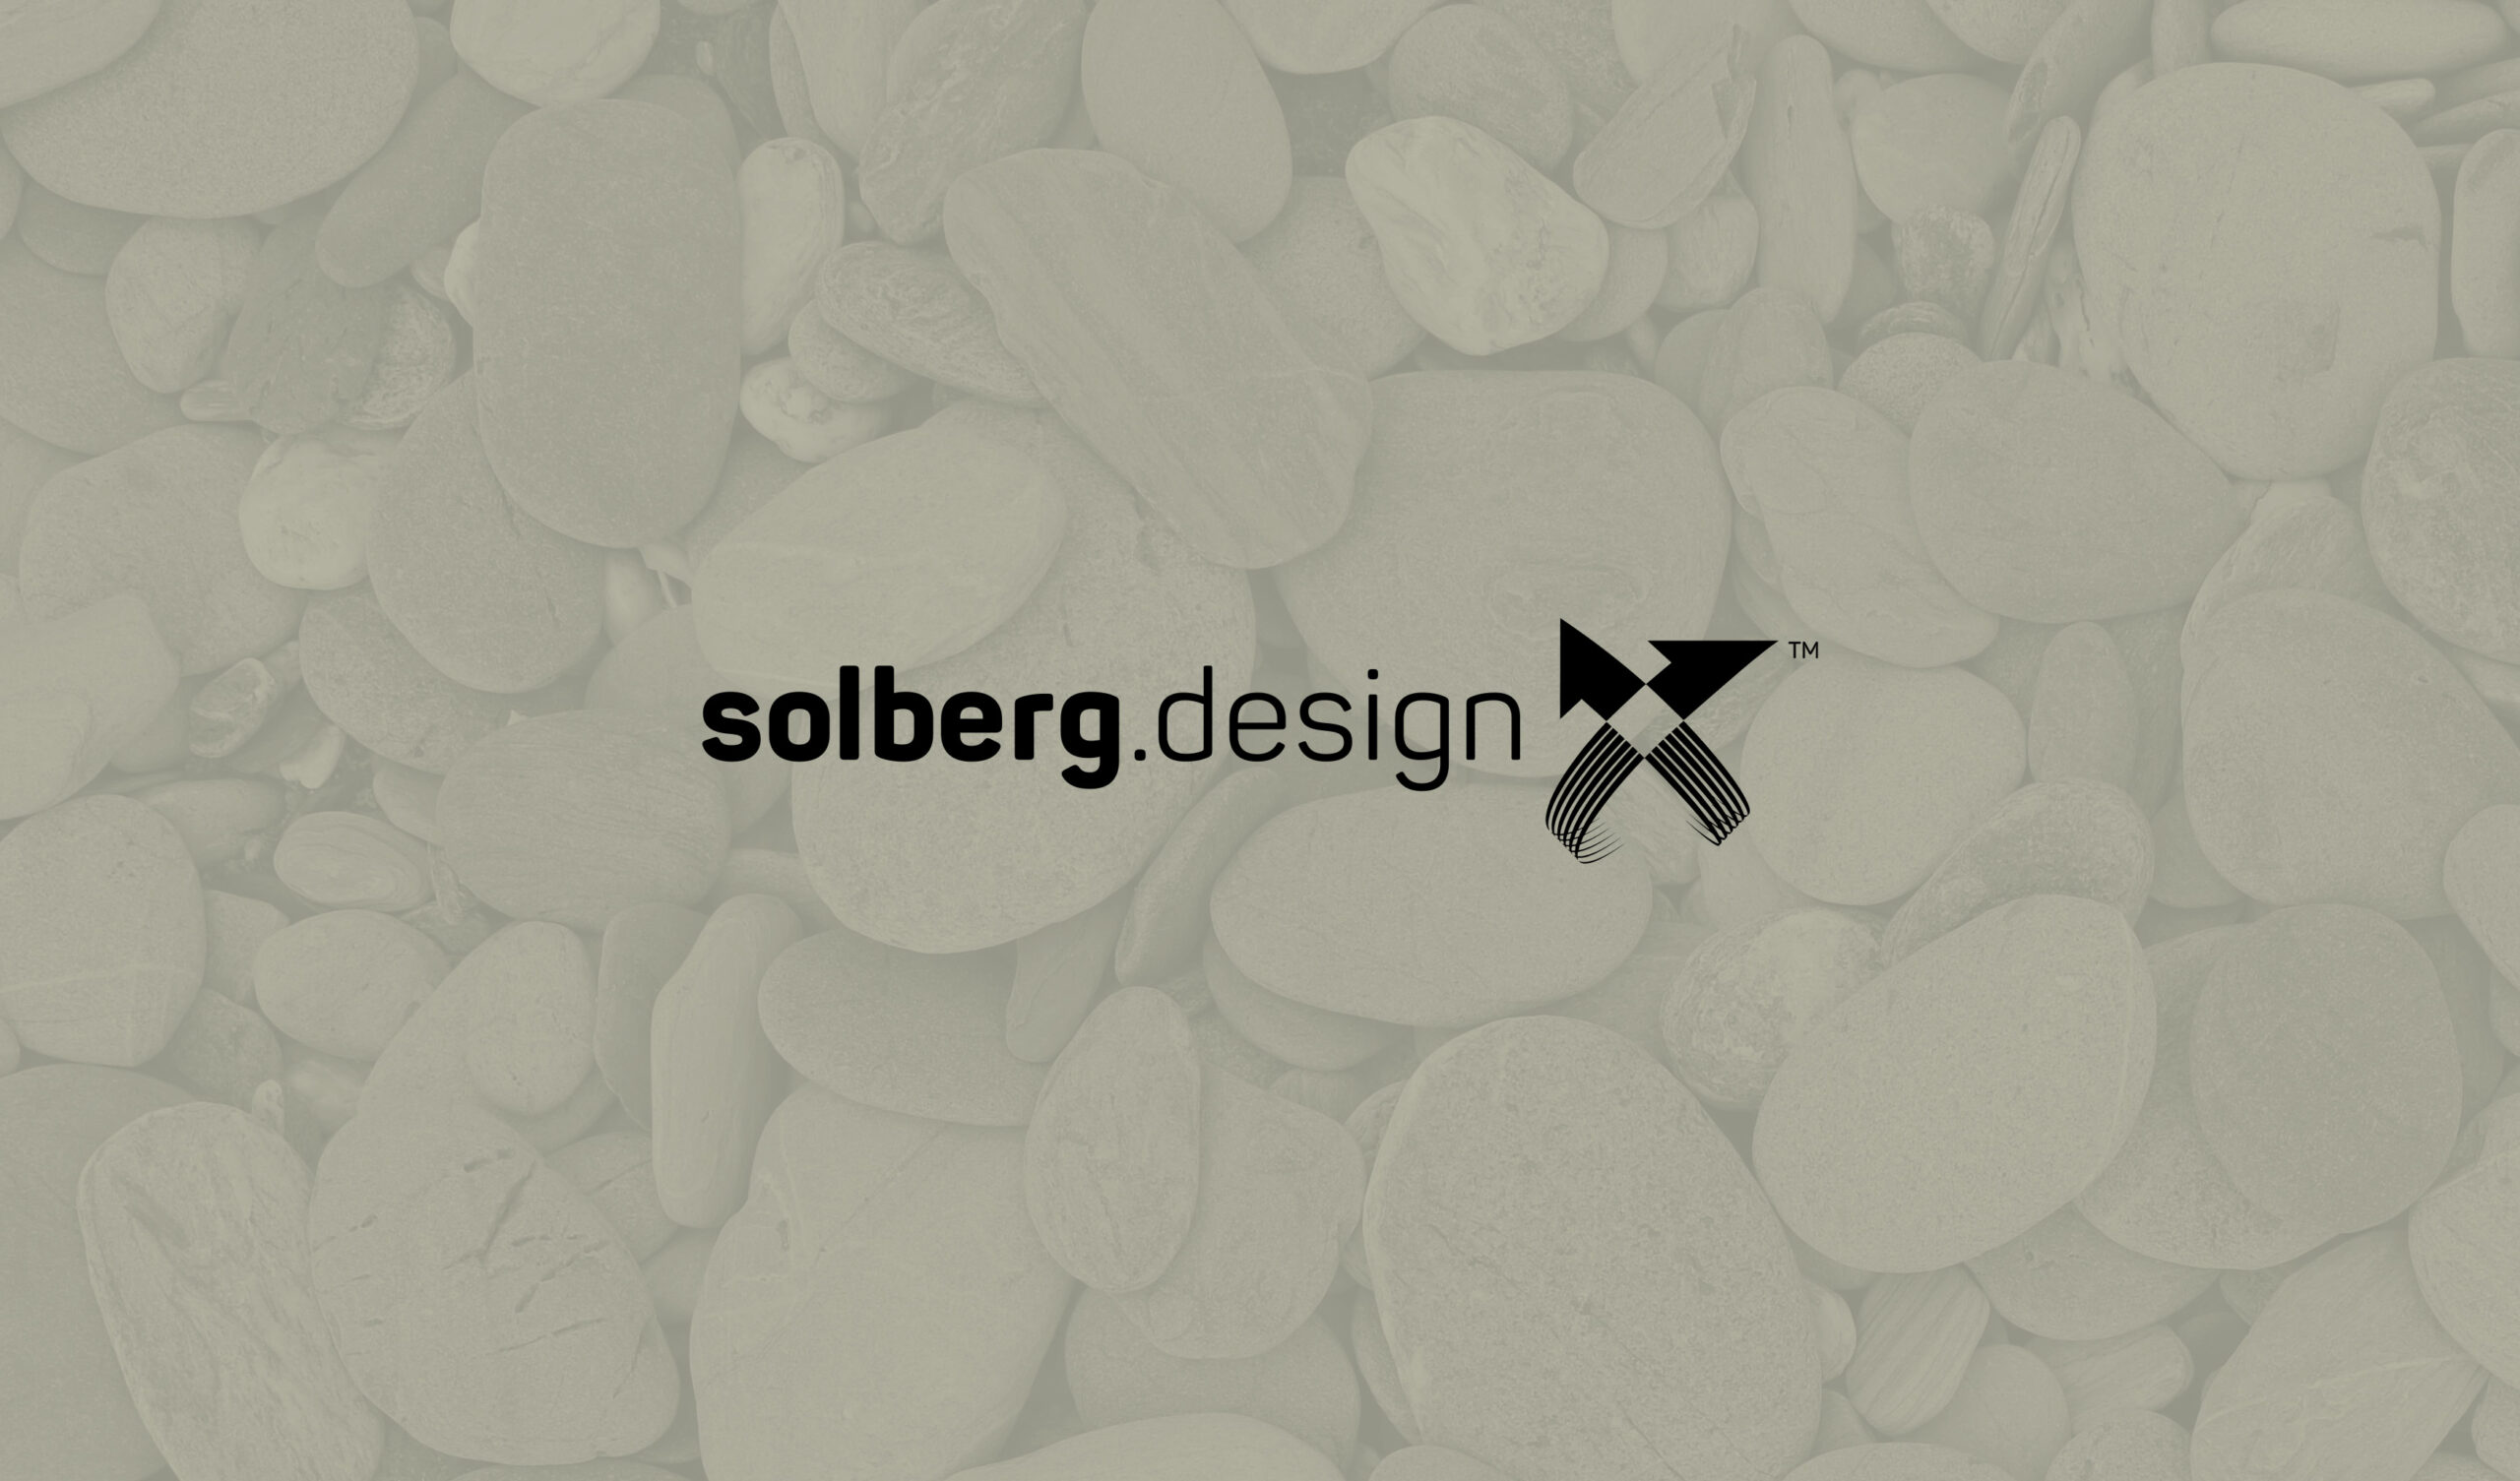 solberg_001